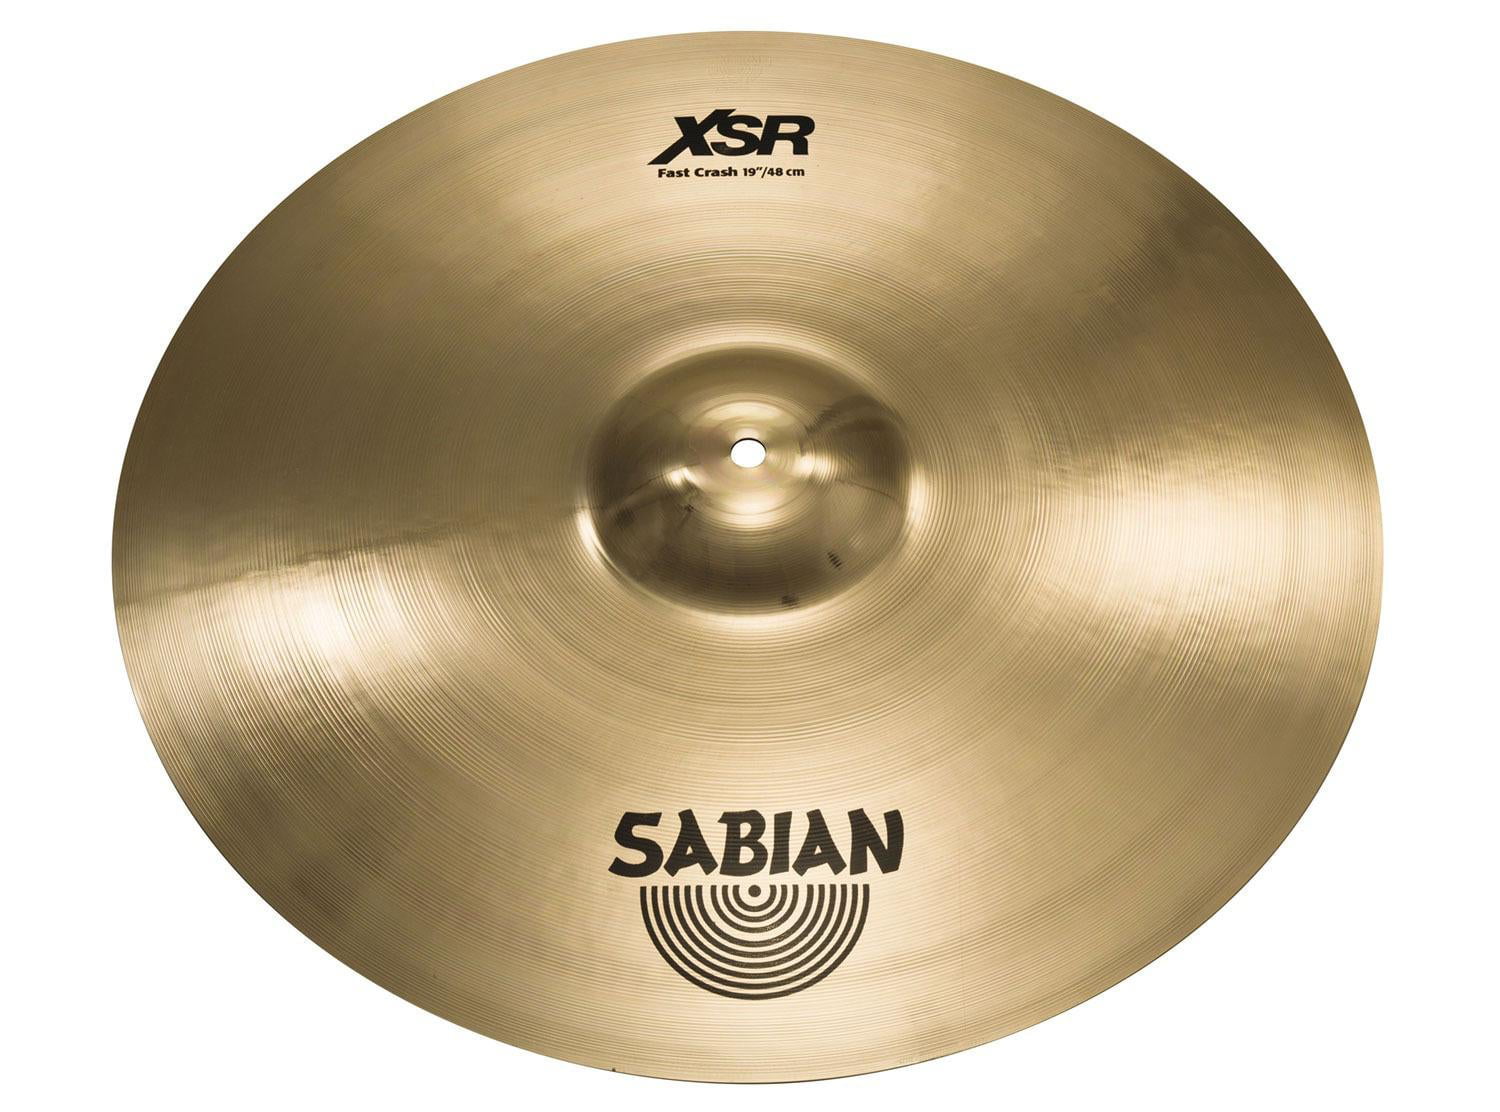 Brilliant Finish Sabian XSR 19 FAST Crash Cymbal 